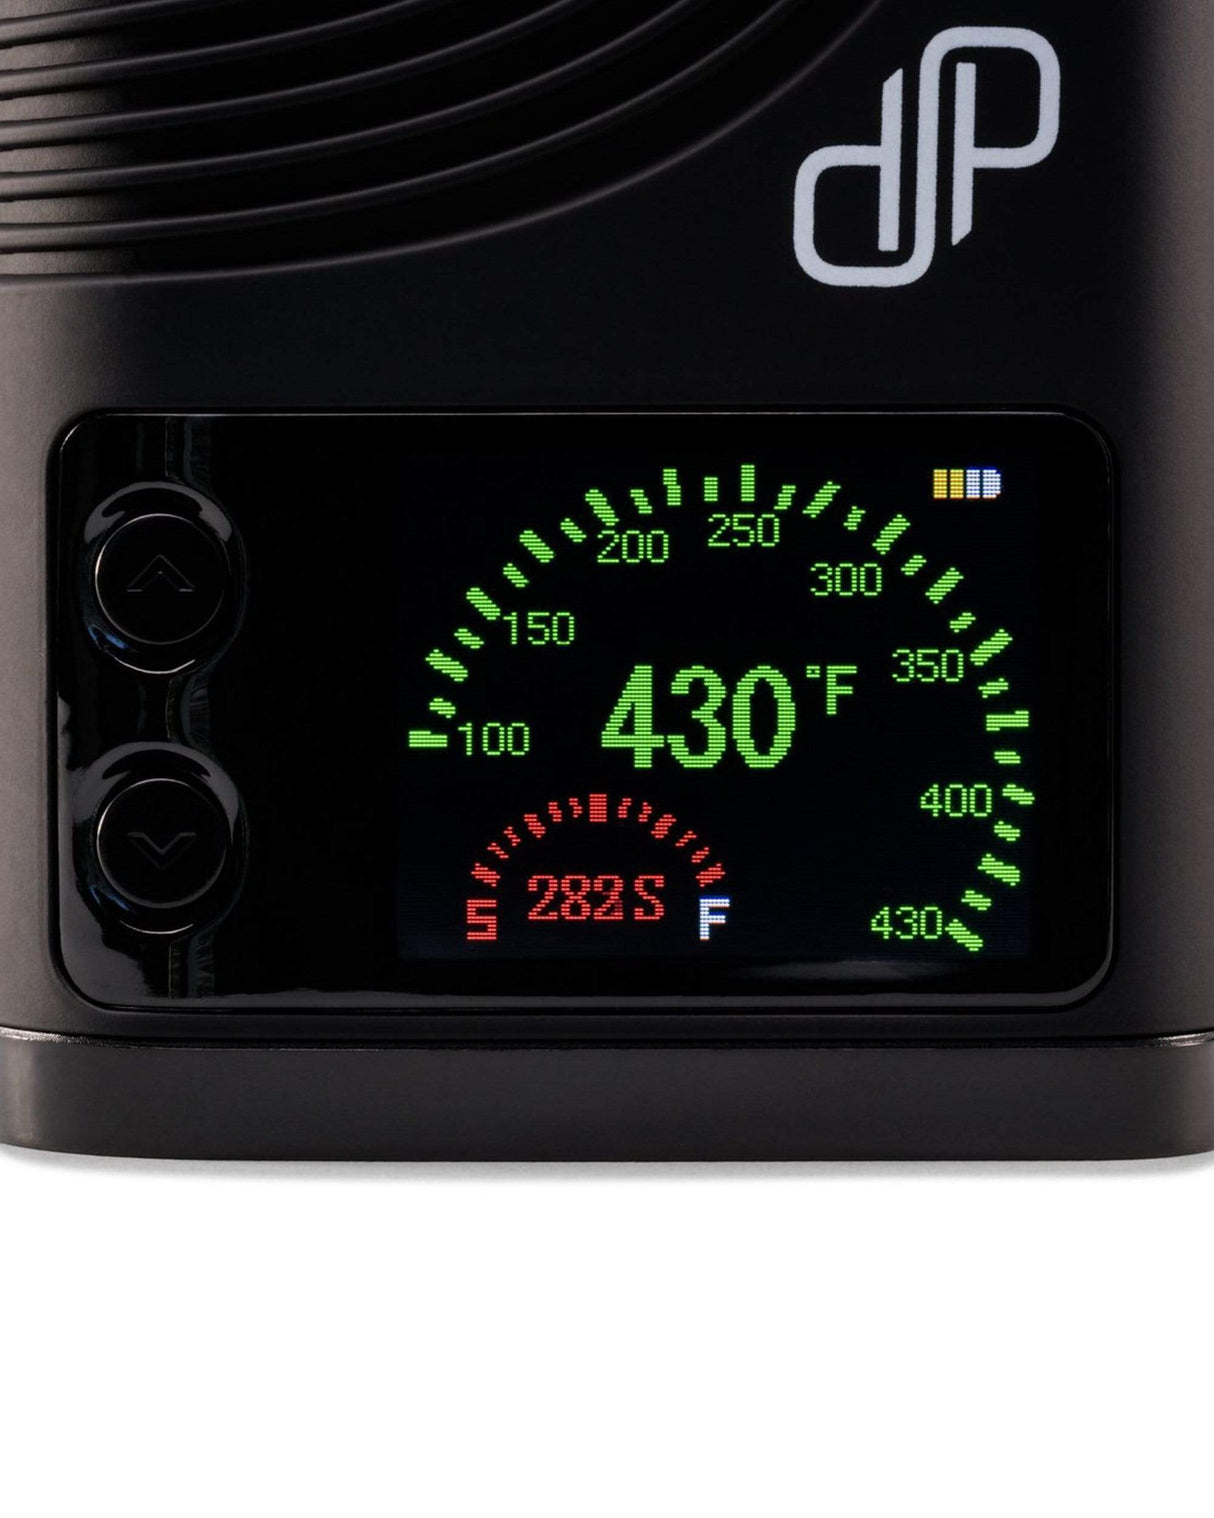 Boundless CFX Vaporizer close-up showing digital temperature display and control buttons